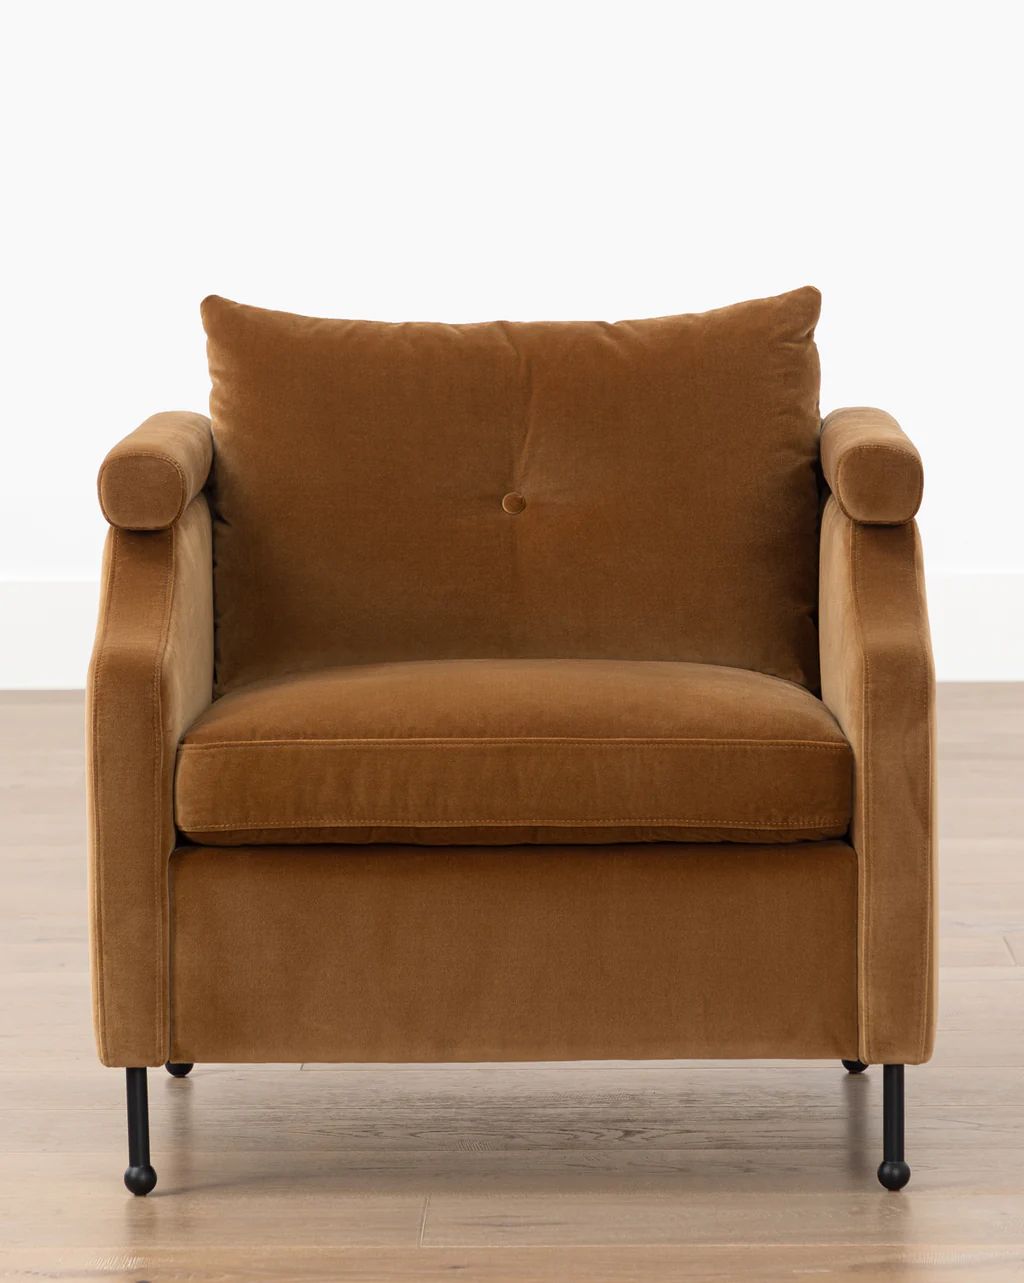 Clegg Lounge Chair | McGee & Co.